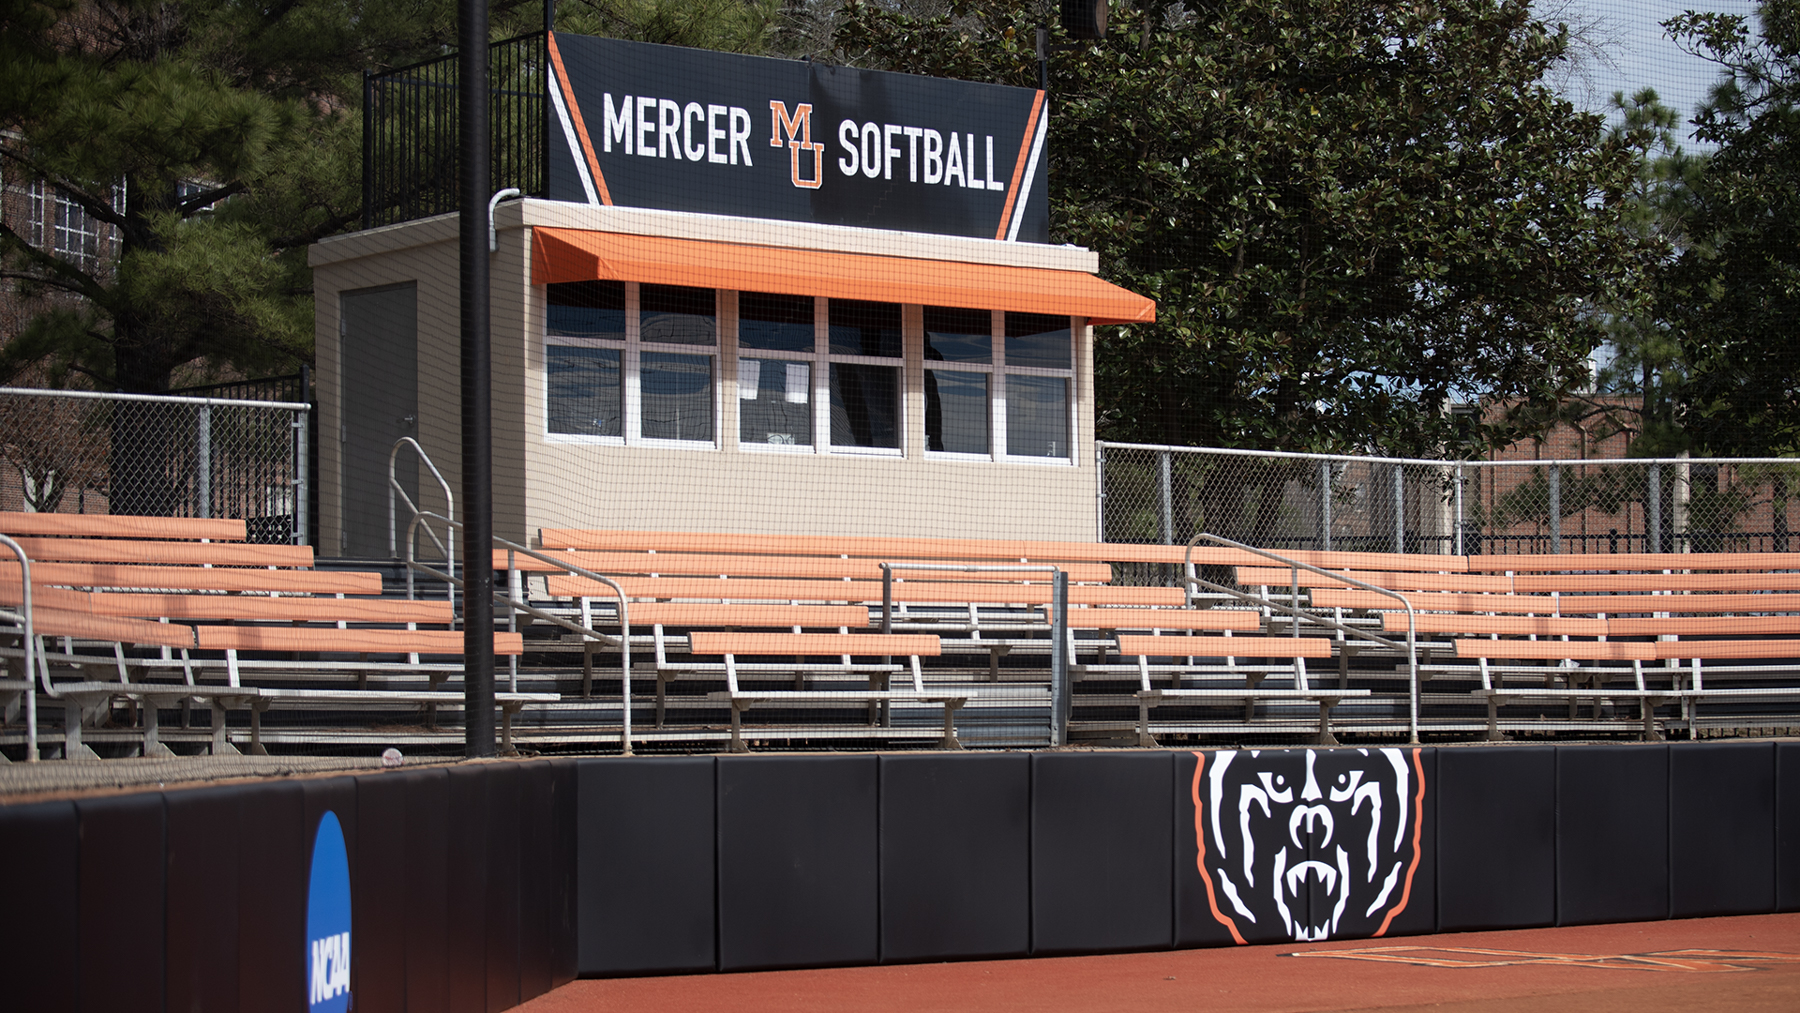 orange and black stands. sign says mercer softball